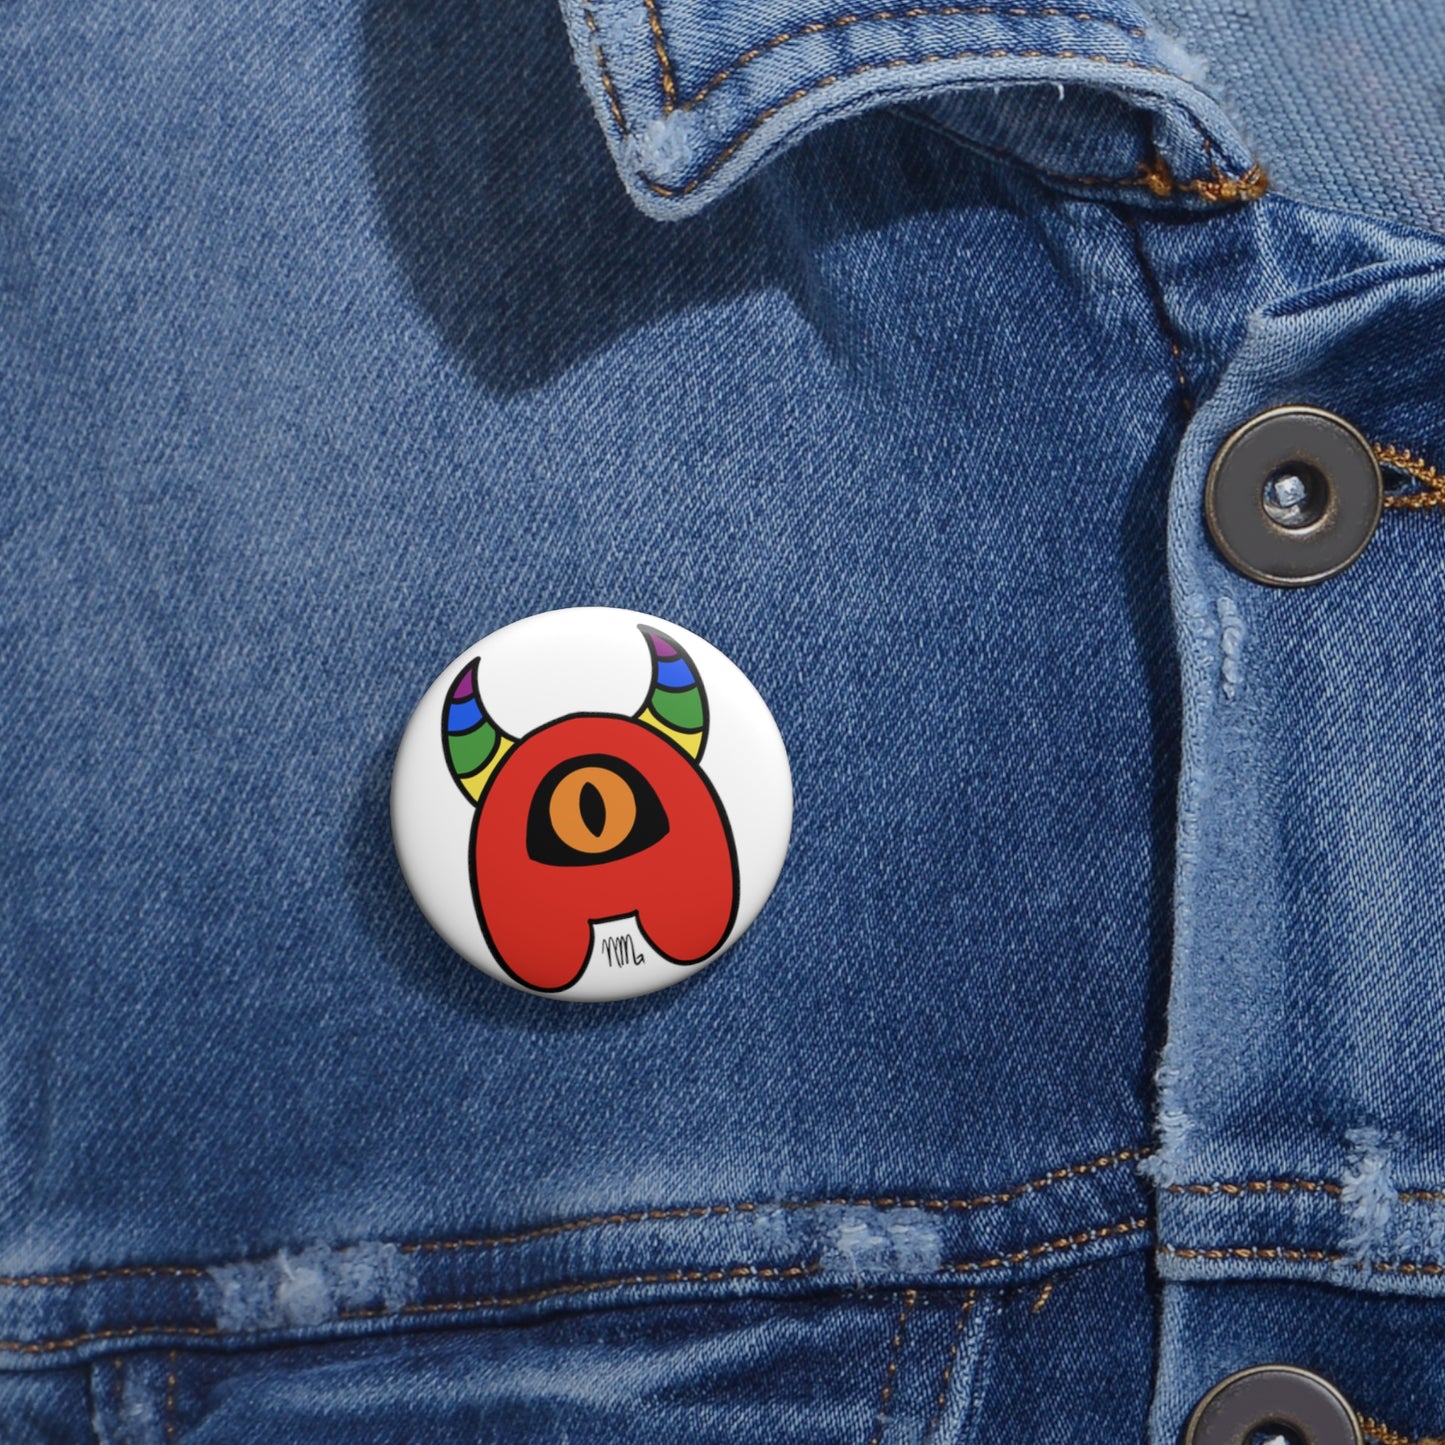 Pride Pin Button | Minmon